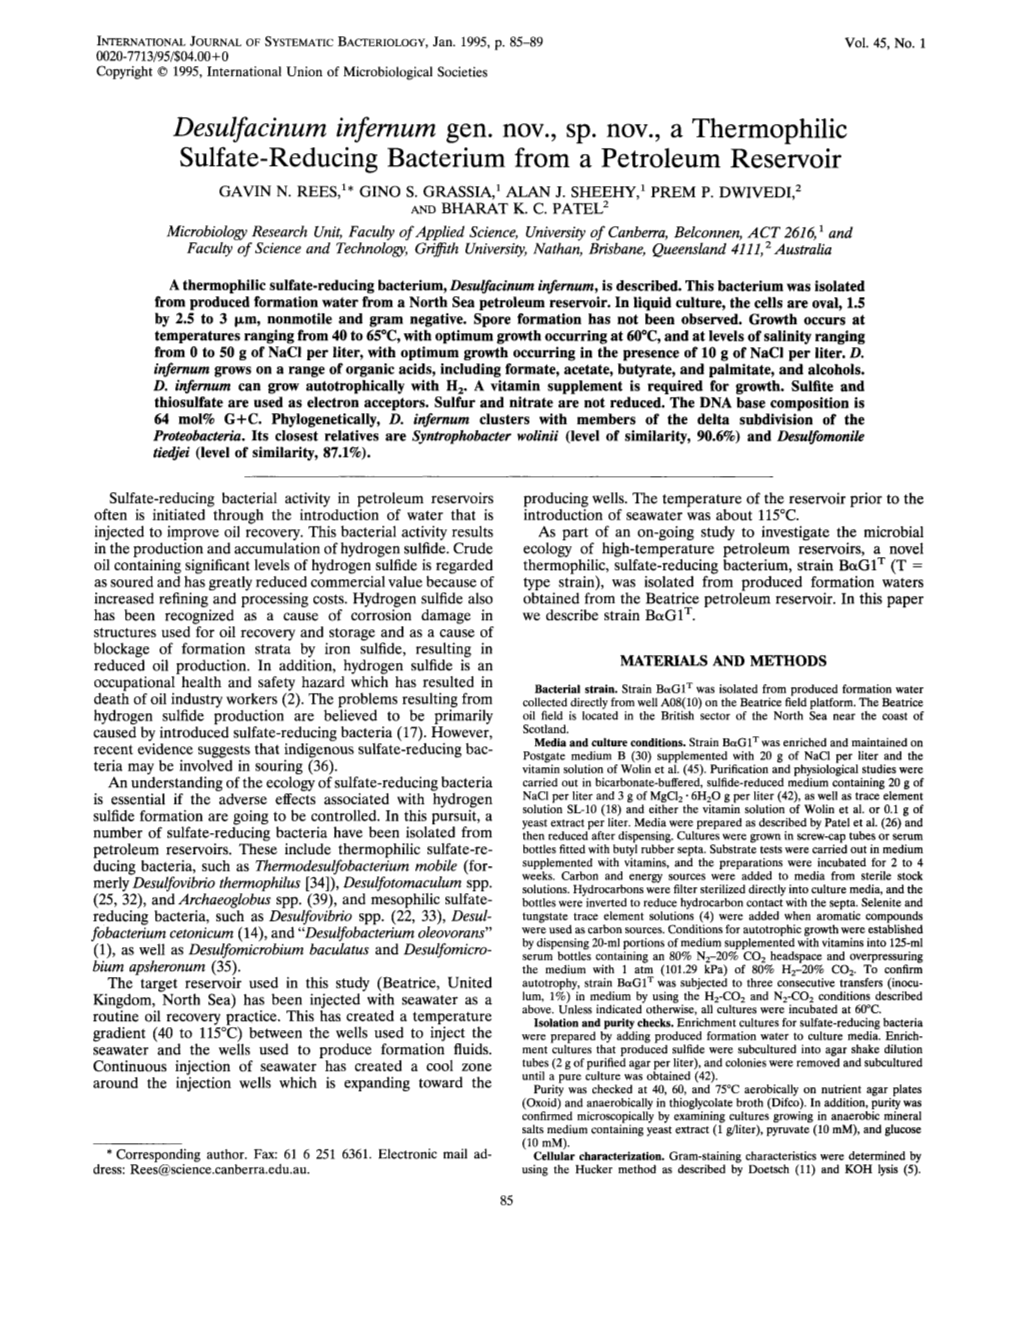 Desulfacinum Infernurn Gem Nov., Sp. Nov., a Thermophilic Sulfate-Reducing Bacterium from a Petroleum Reservoir GAVIN N